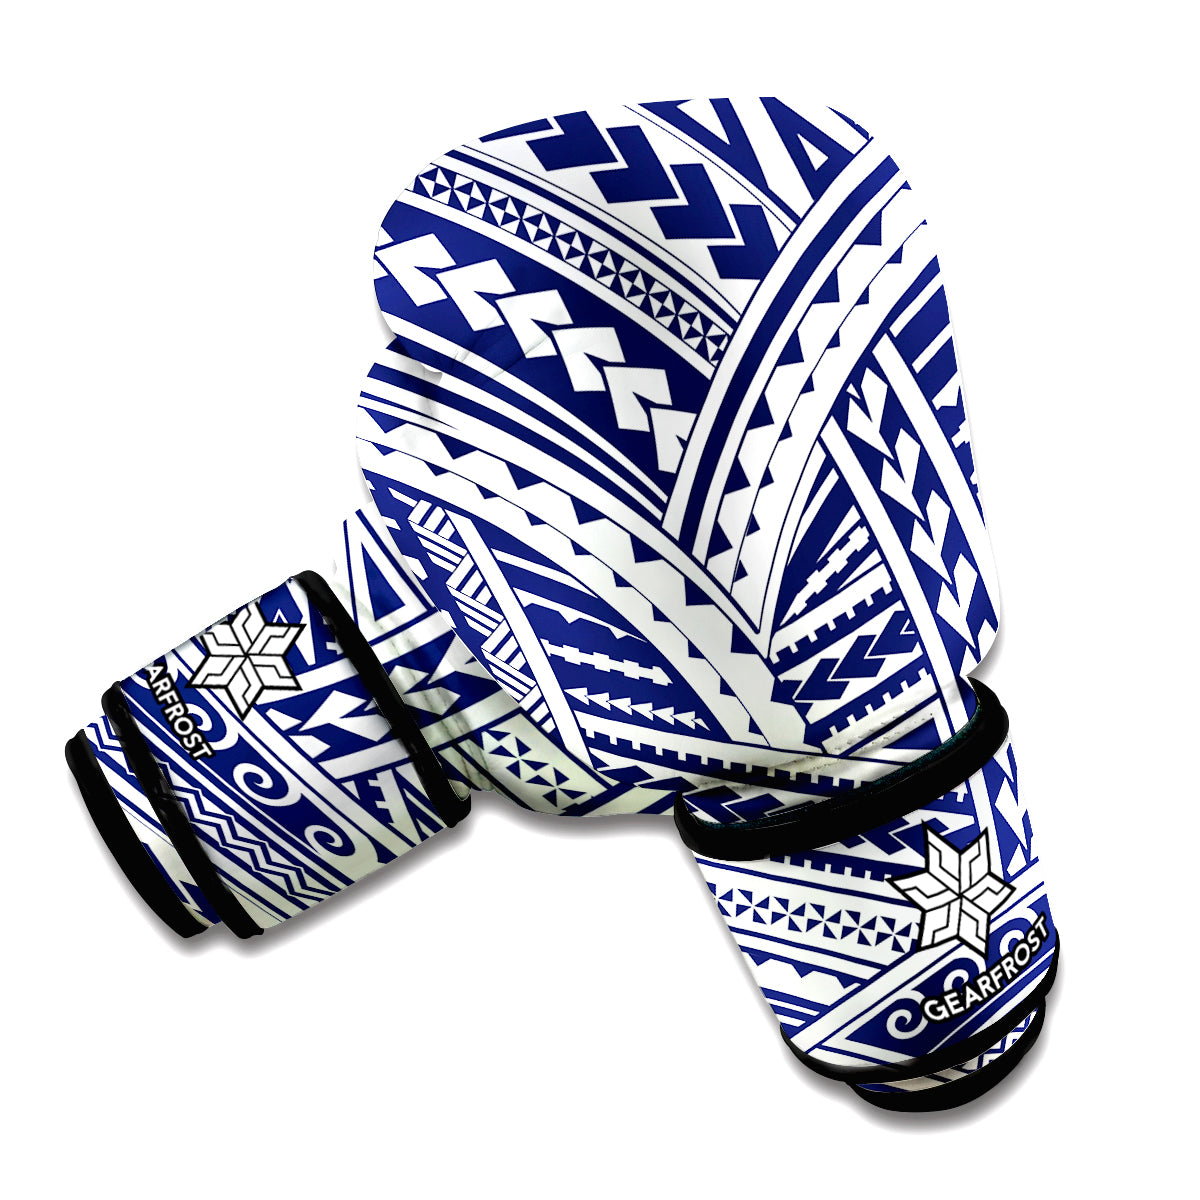 Blue Maori Polynesian Tattoo Print Boxing Gloves